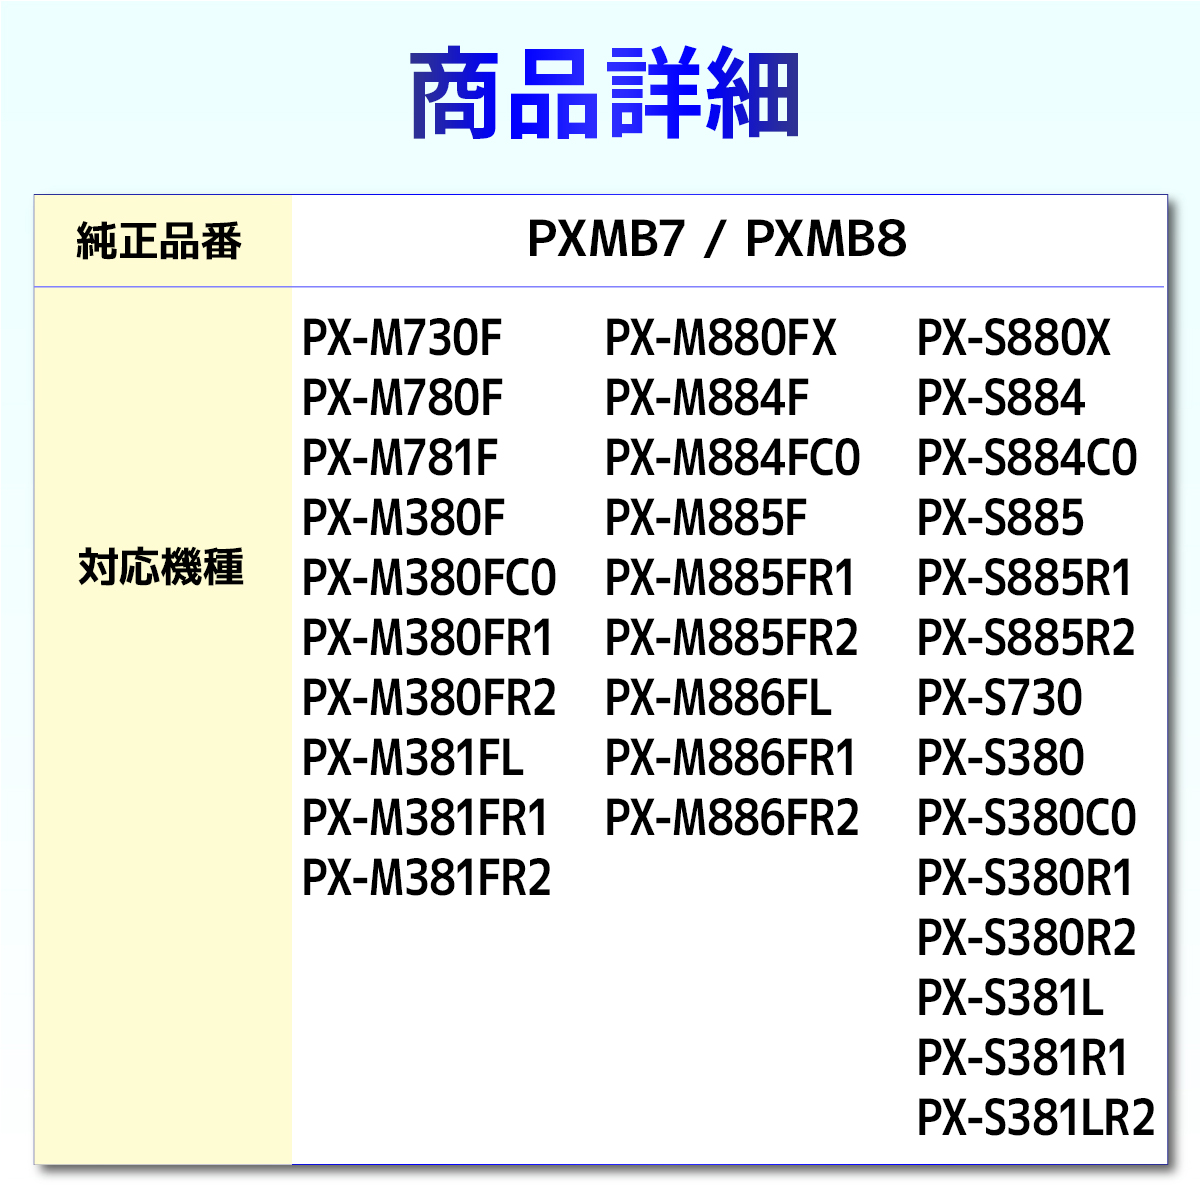 PXMB7 PXMB8 互換メンテナンスボックス ２個 PX-M730F PX-M780F PX-M781F PX-M380F PX-M380 PX-M381 PX-M884 PX-M885 PX-M886 PX-S380 PX-S381 PX-S884 PX-S885